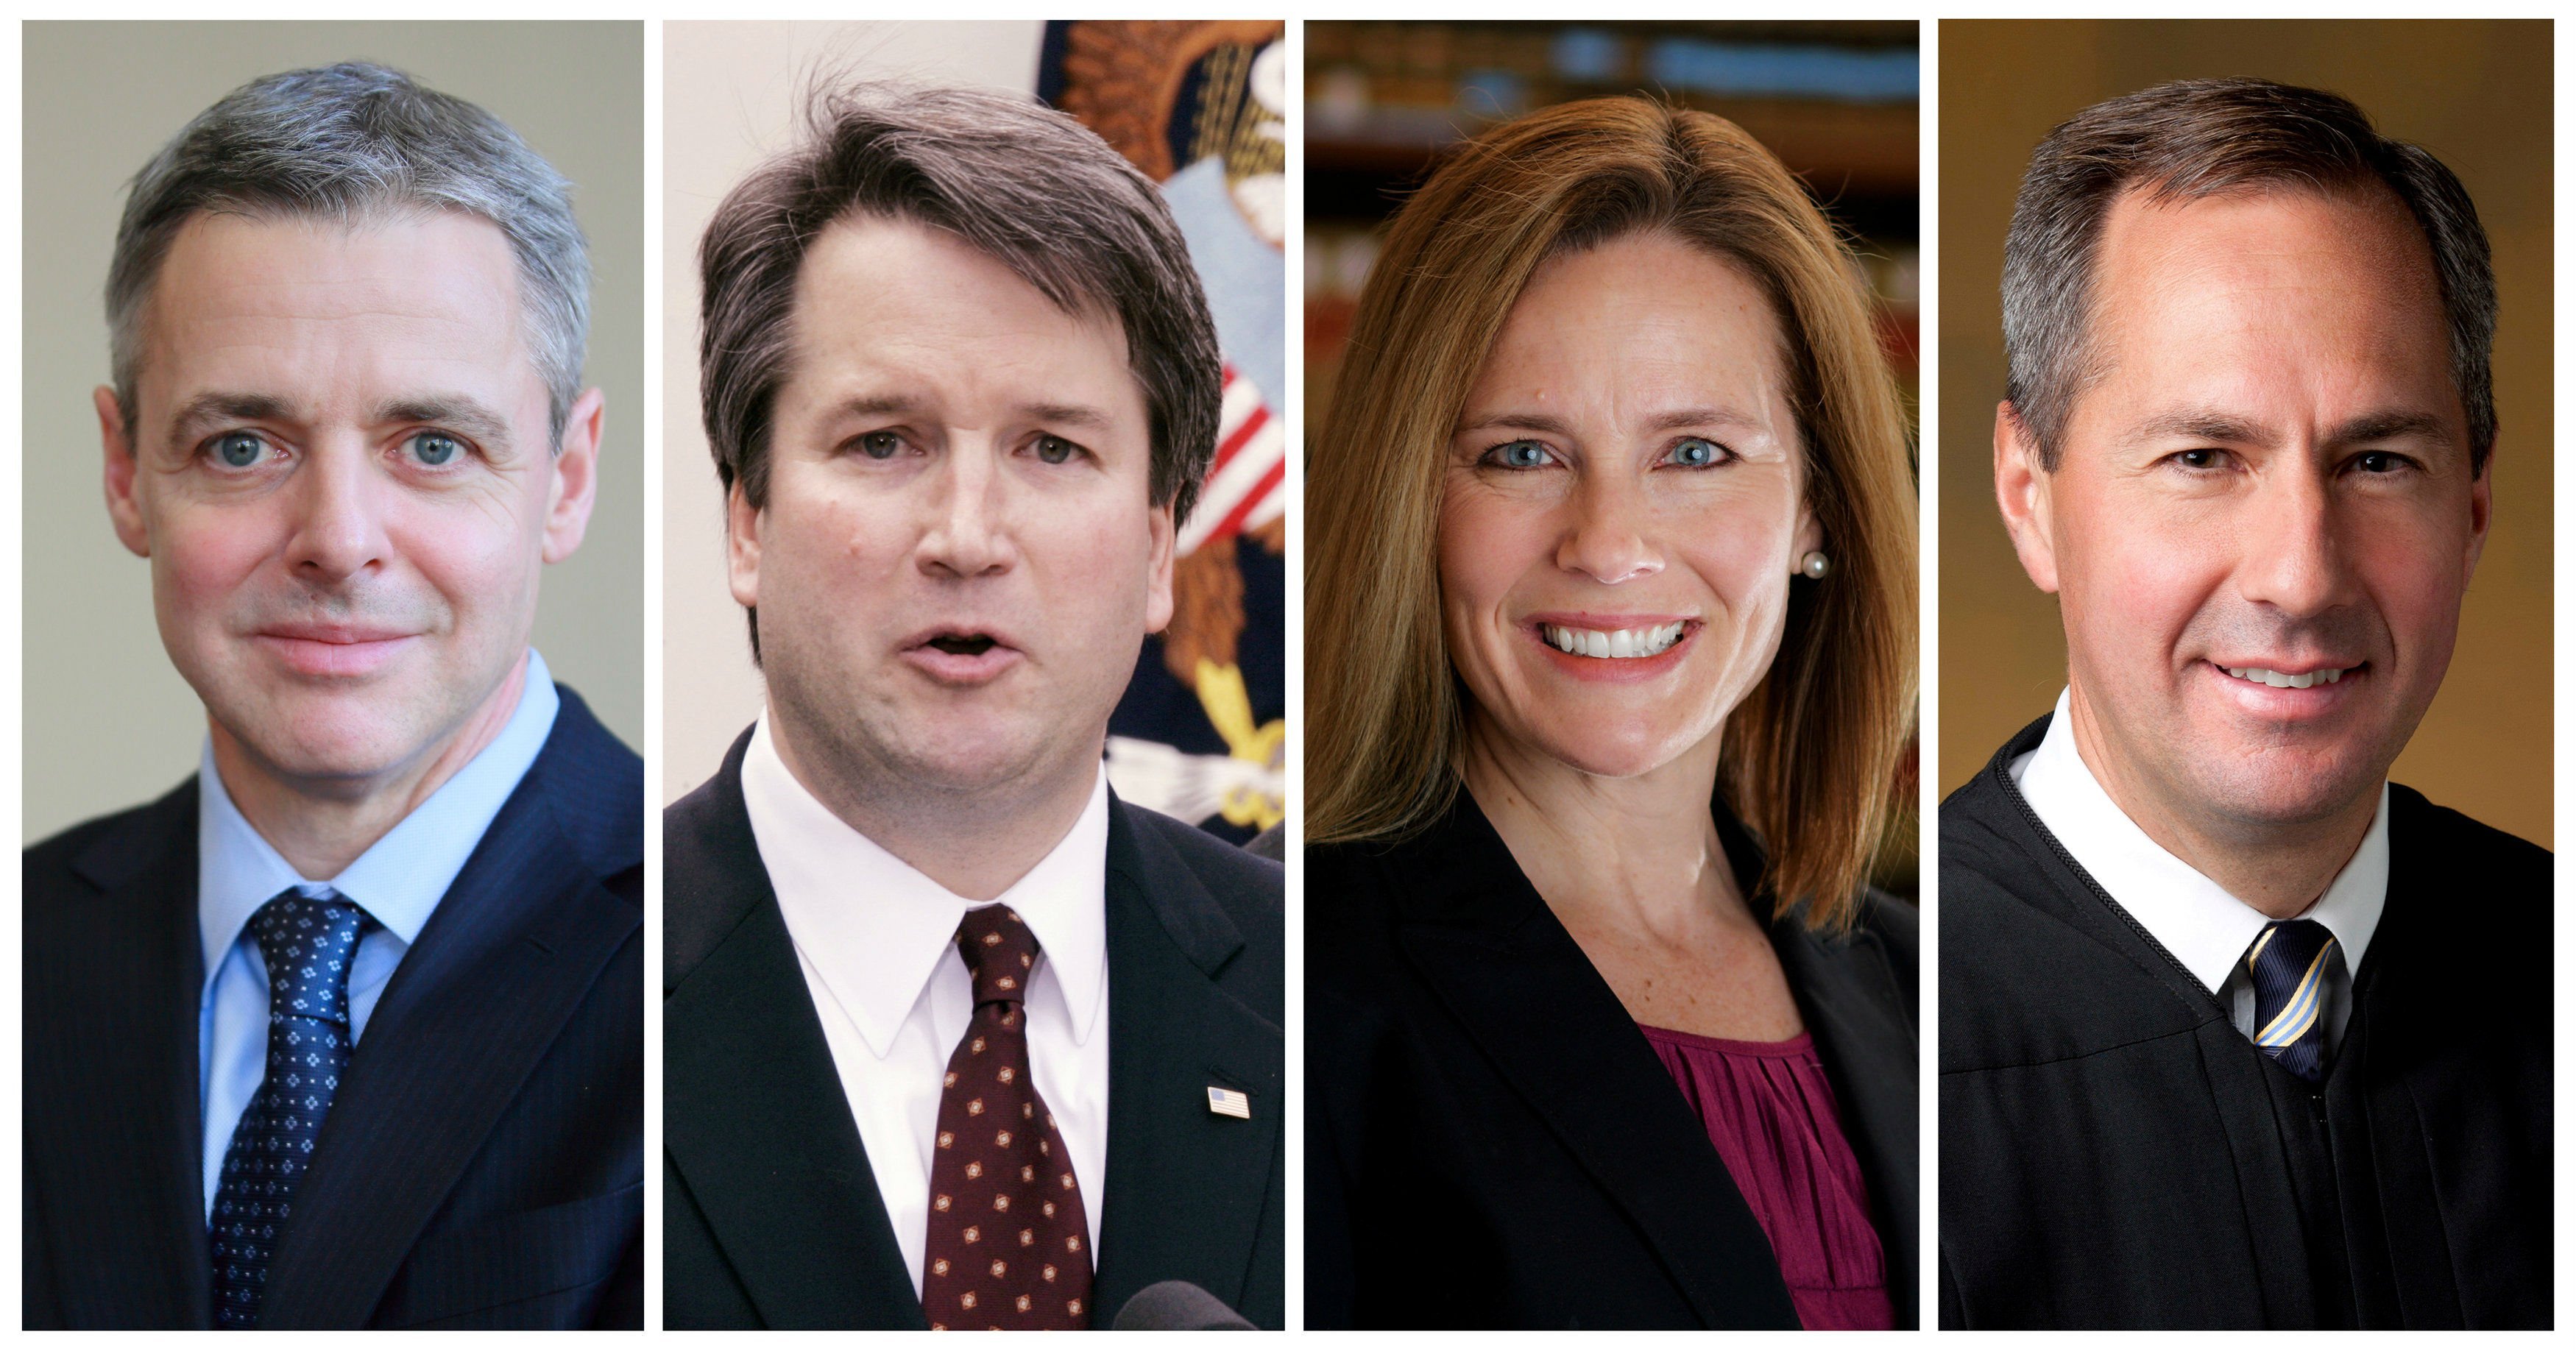 Os juízes Raymond Kethledge, Brett Kavanaugh, Amy Coney Barrett e Thomas Hardiman, candidatos ao cargo na Suprema Corte dos EUA